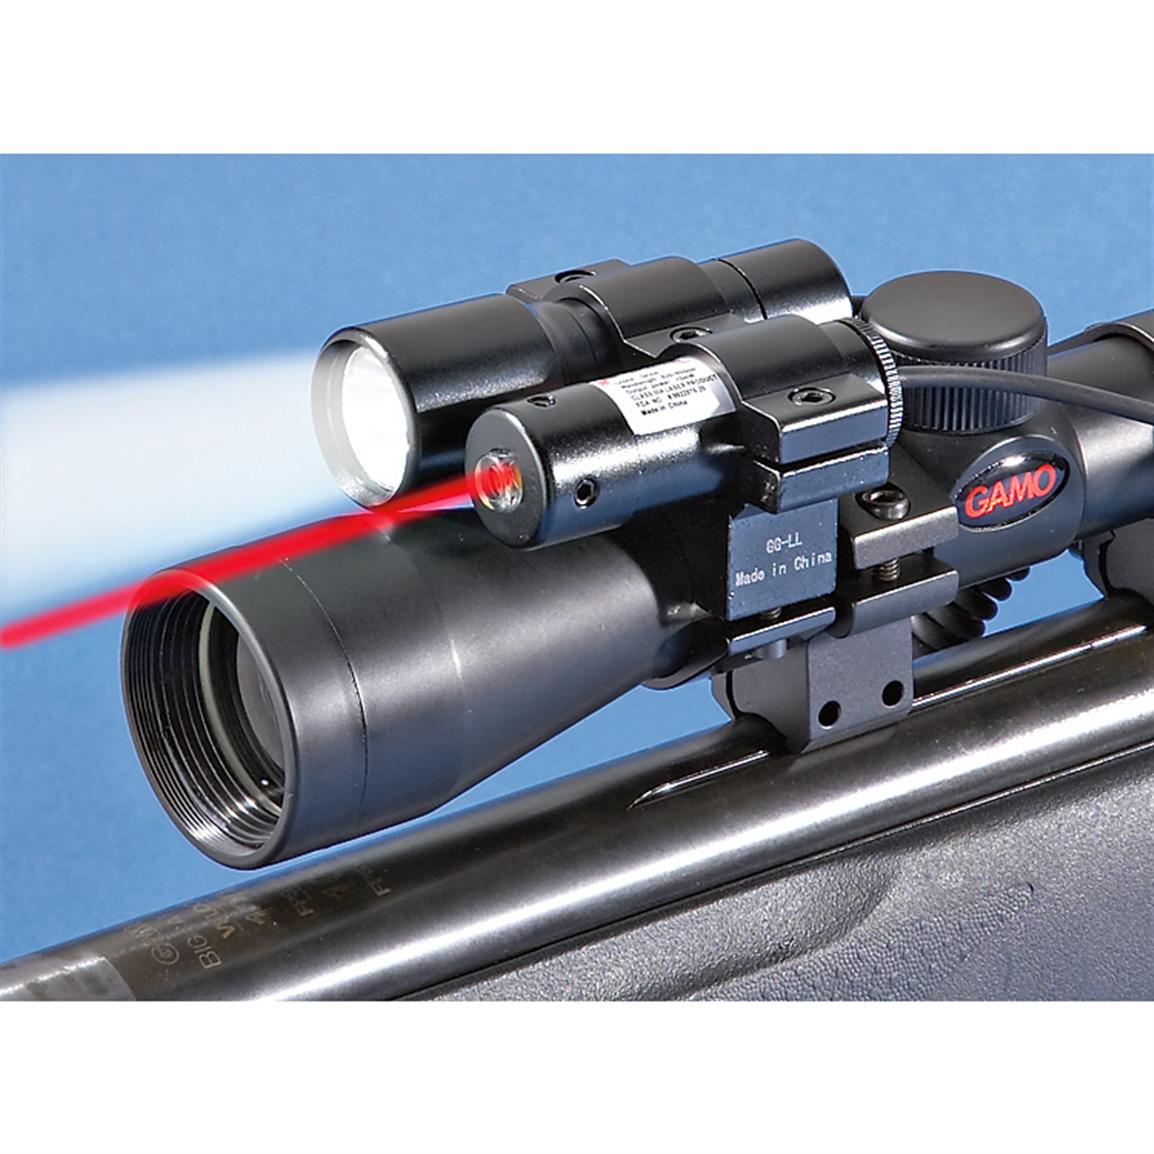  Gamo   Big  Cat  Varmint Air  Rifle  with Scope Laser Light 